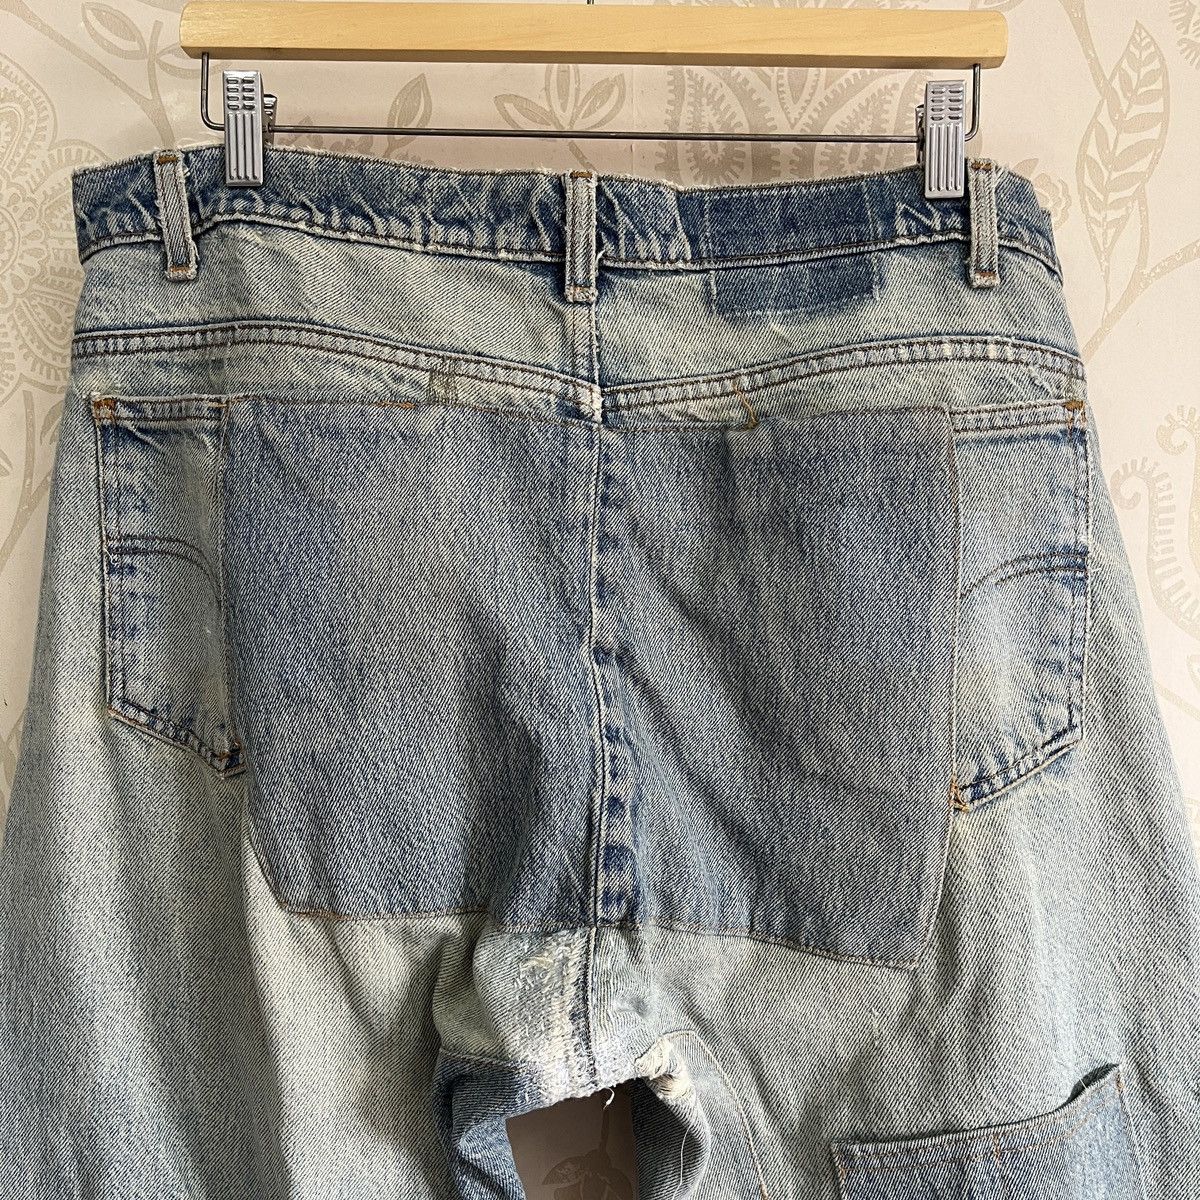 Grails Vintage Custom Matsuda Kapital Patches Japanese Jeans - 20